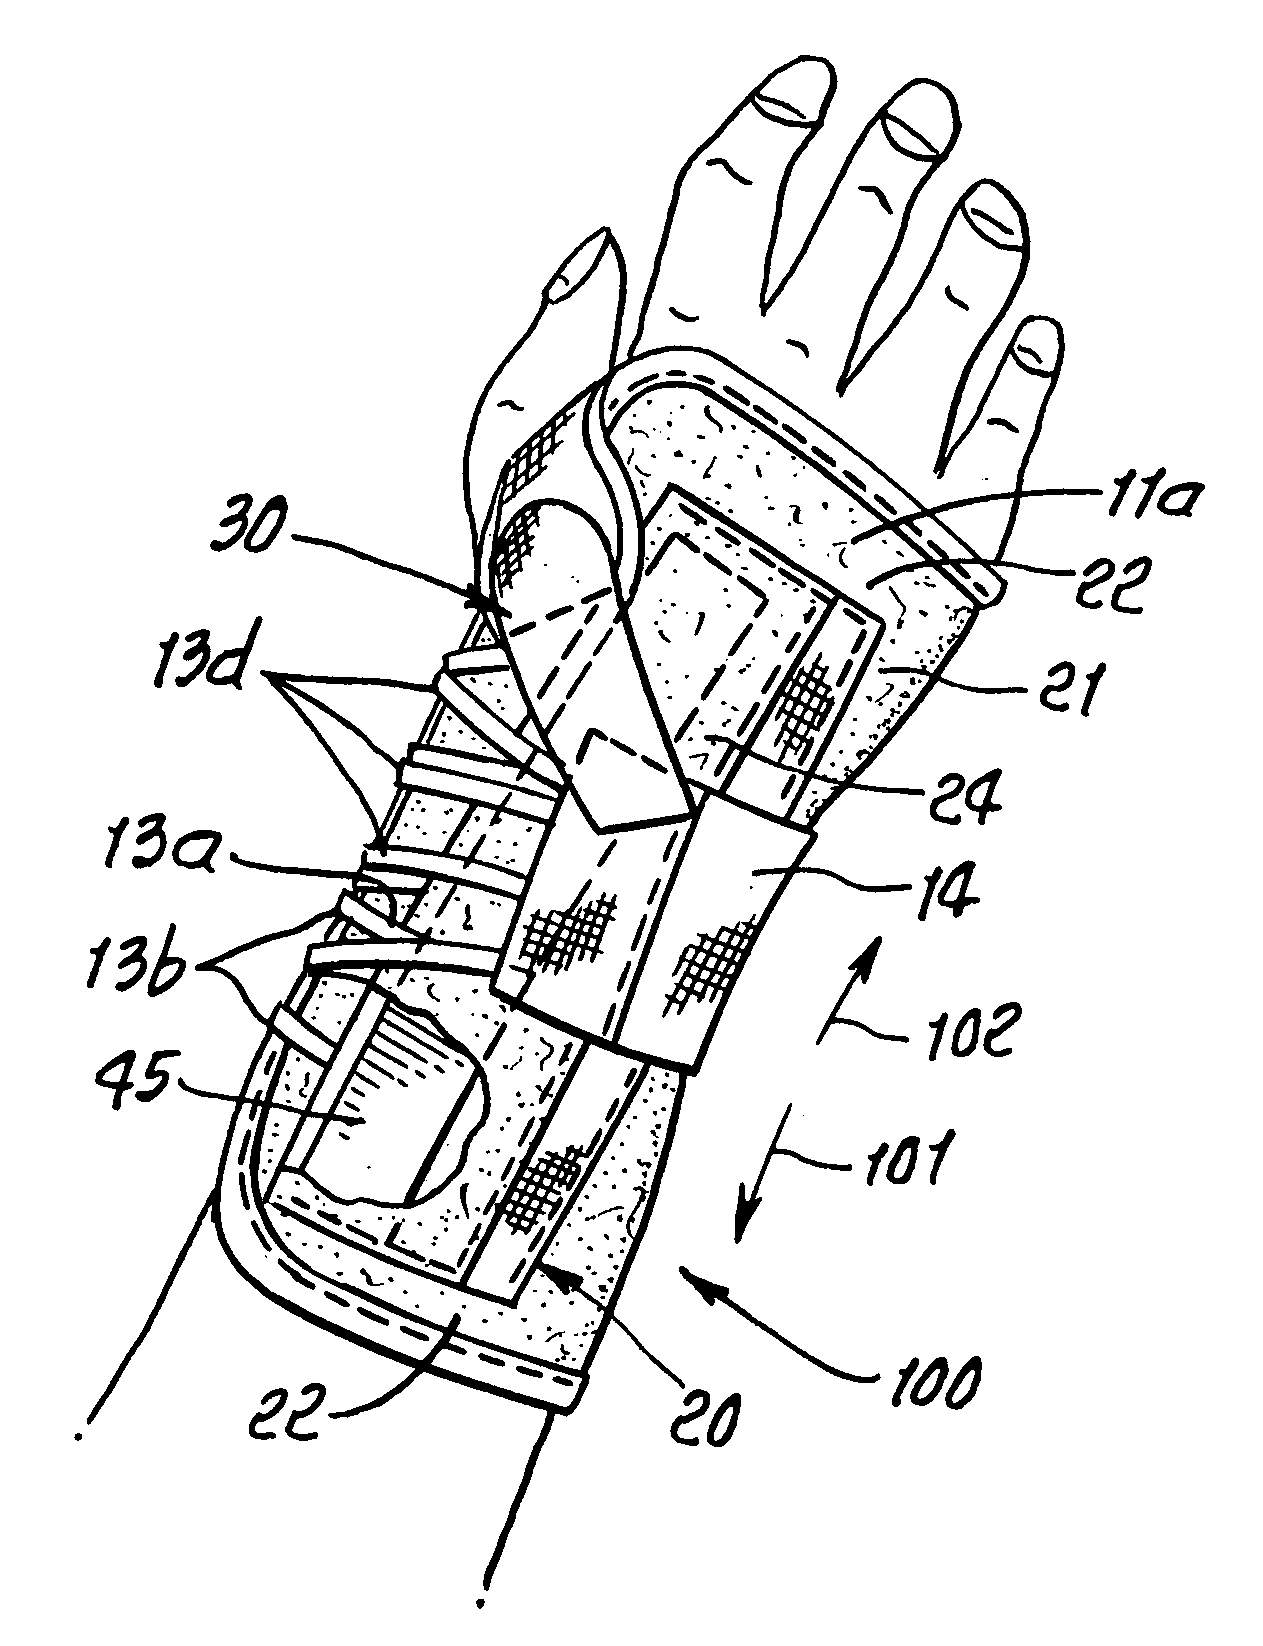 Multi-adjustable wrist brace